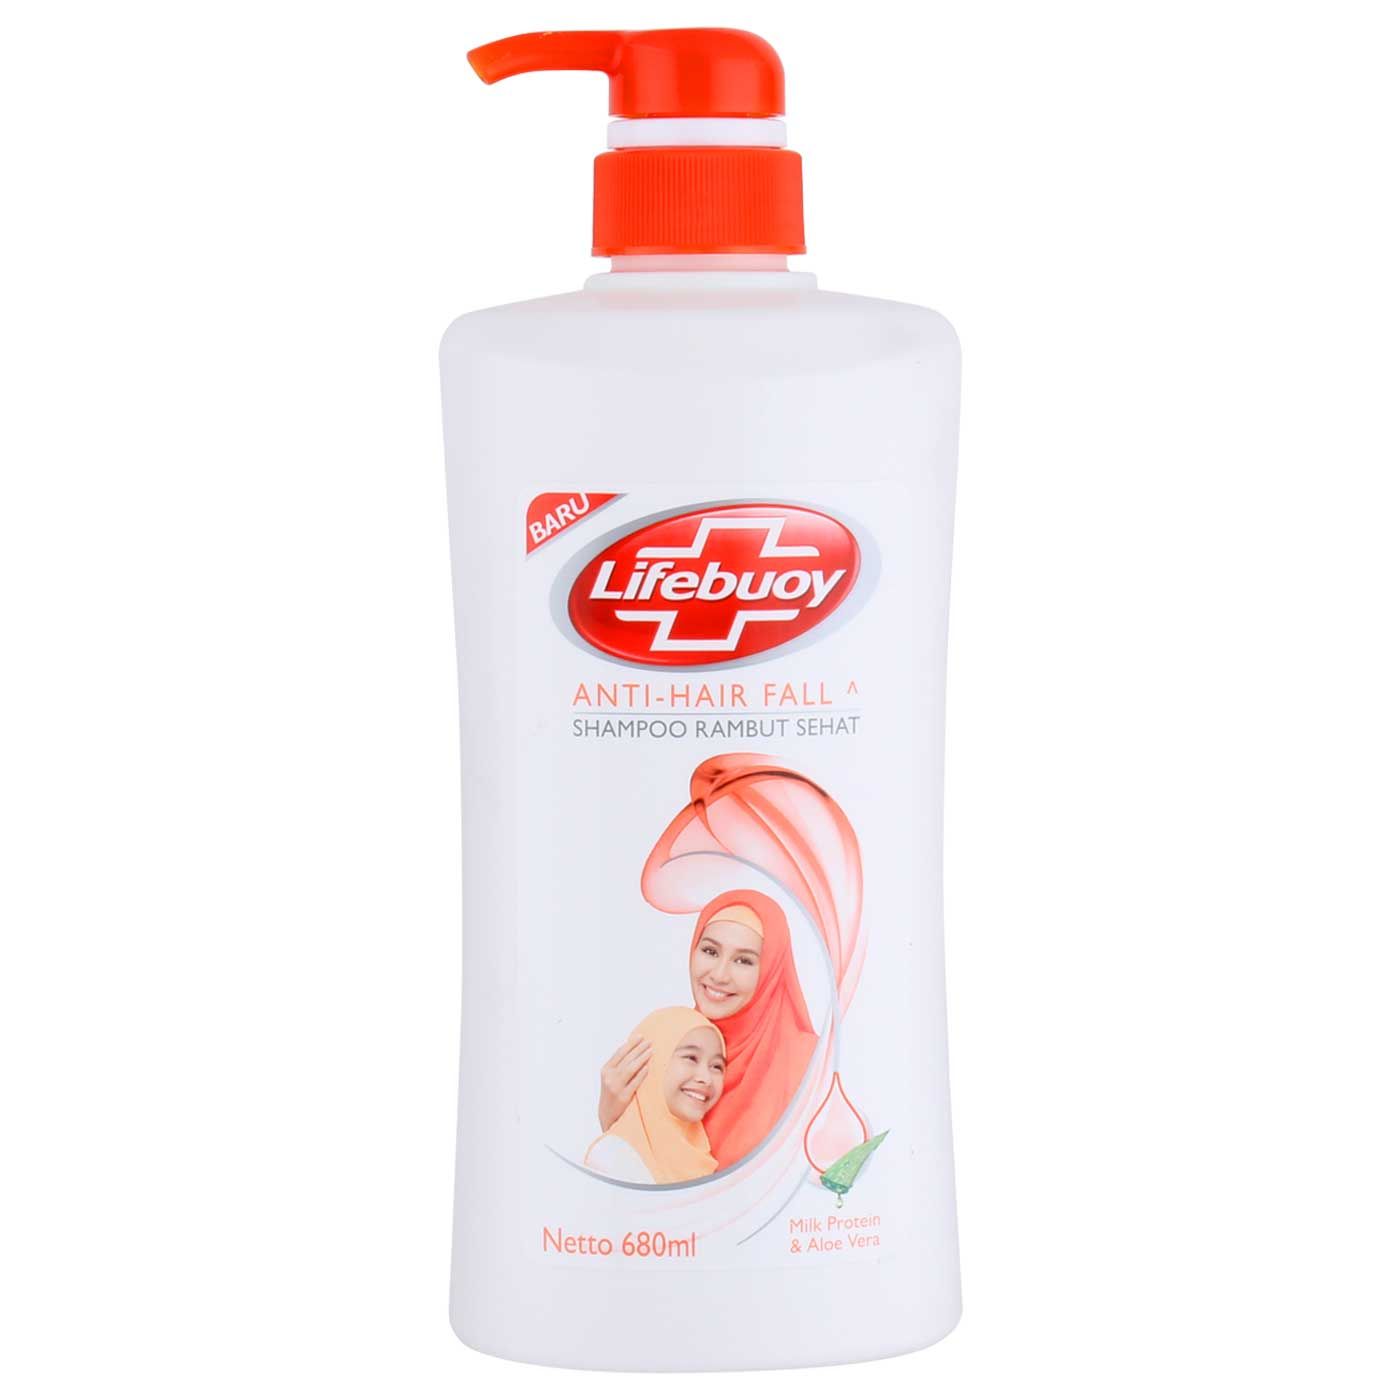 Lifebuoy Shampoo Anti Hairfall Fx 680ml - 1